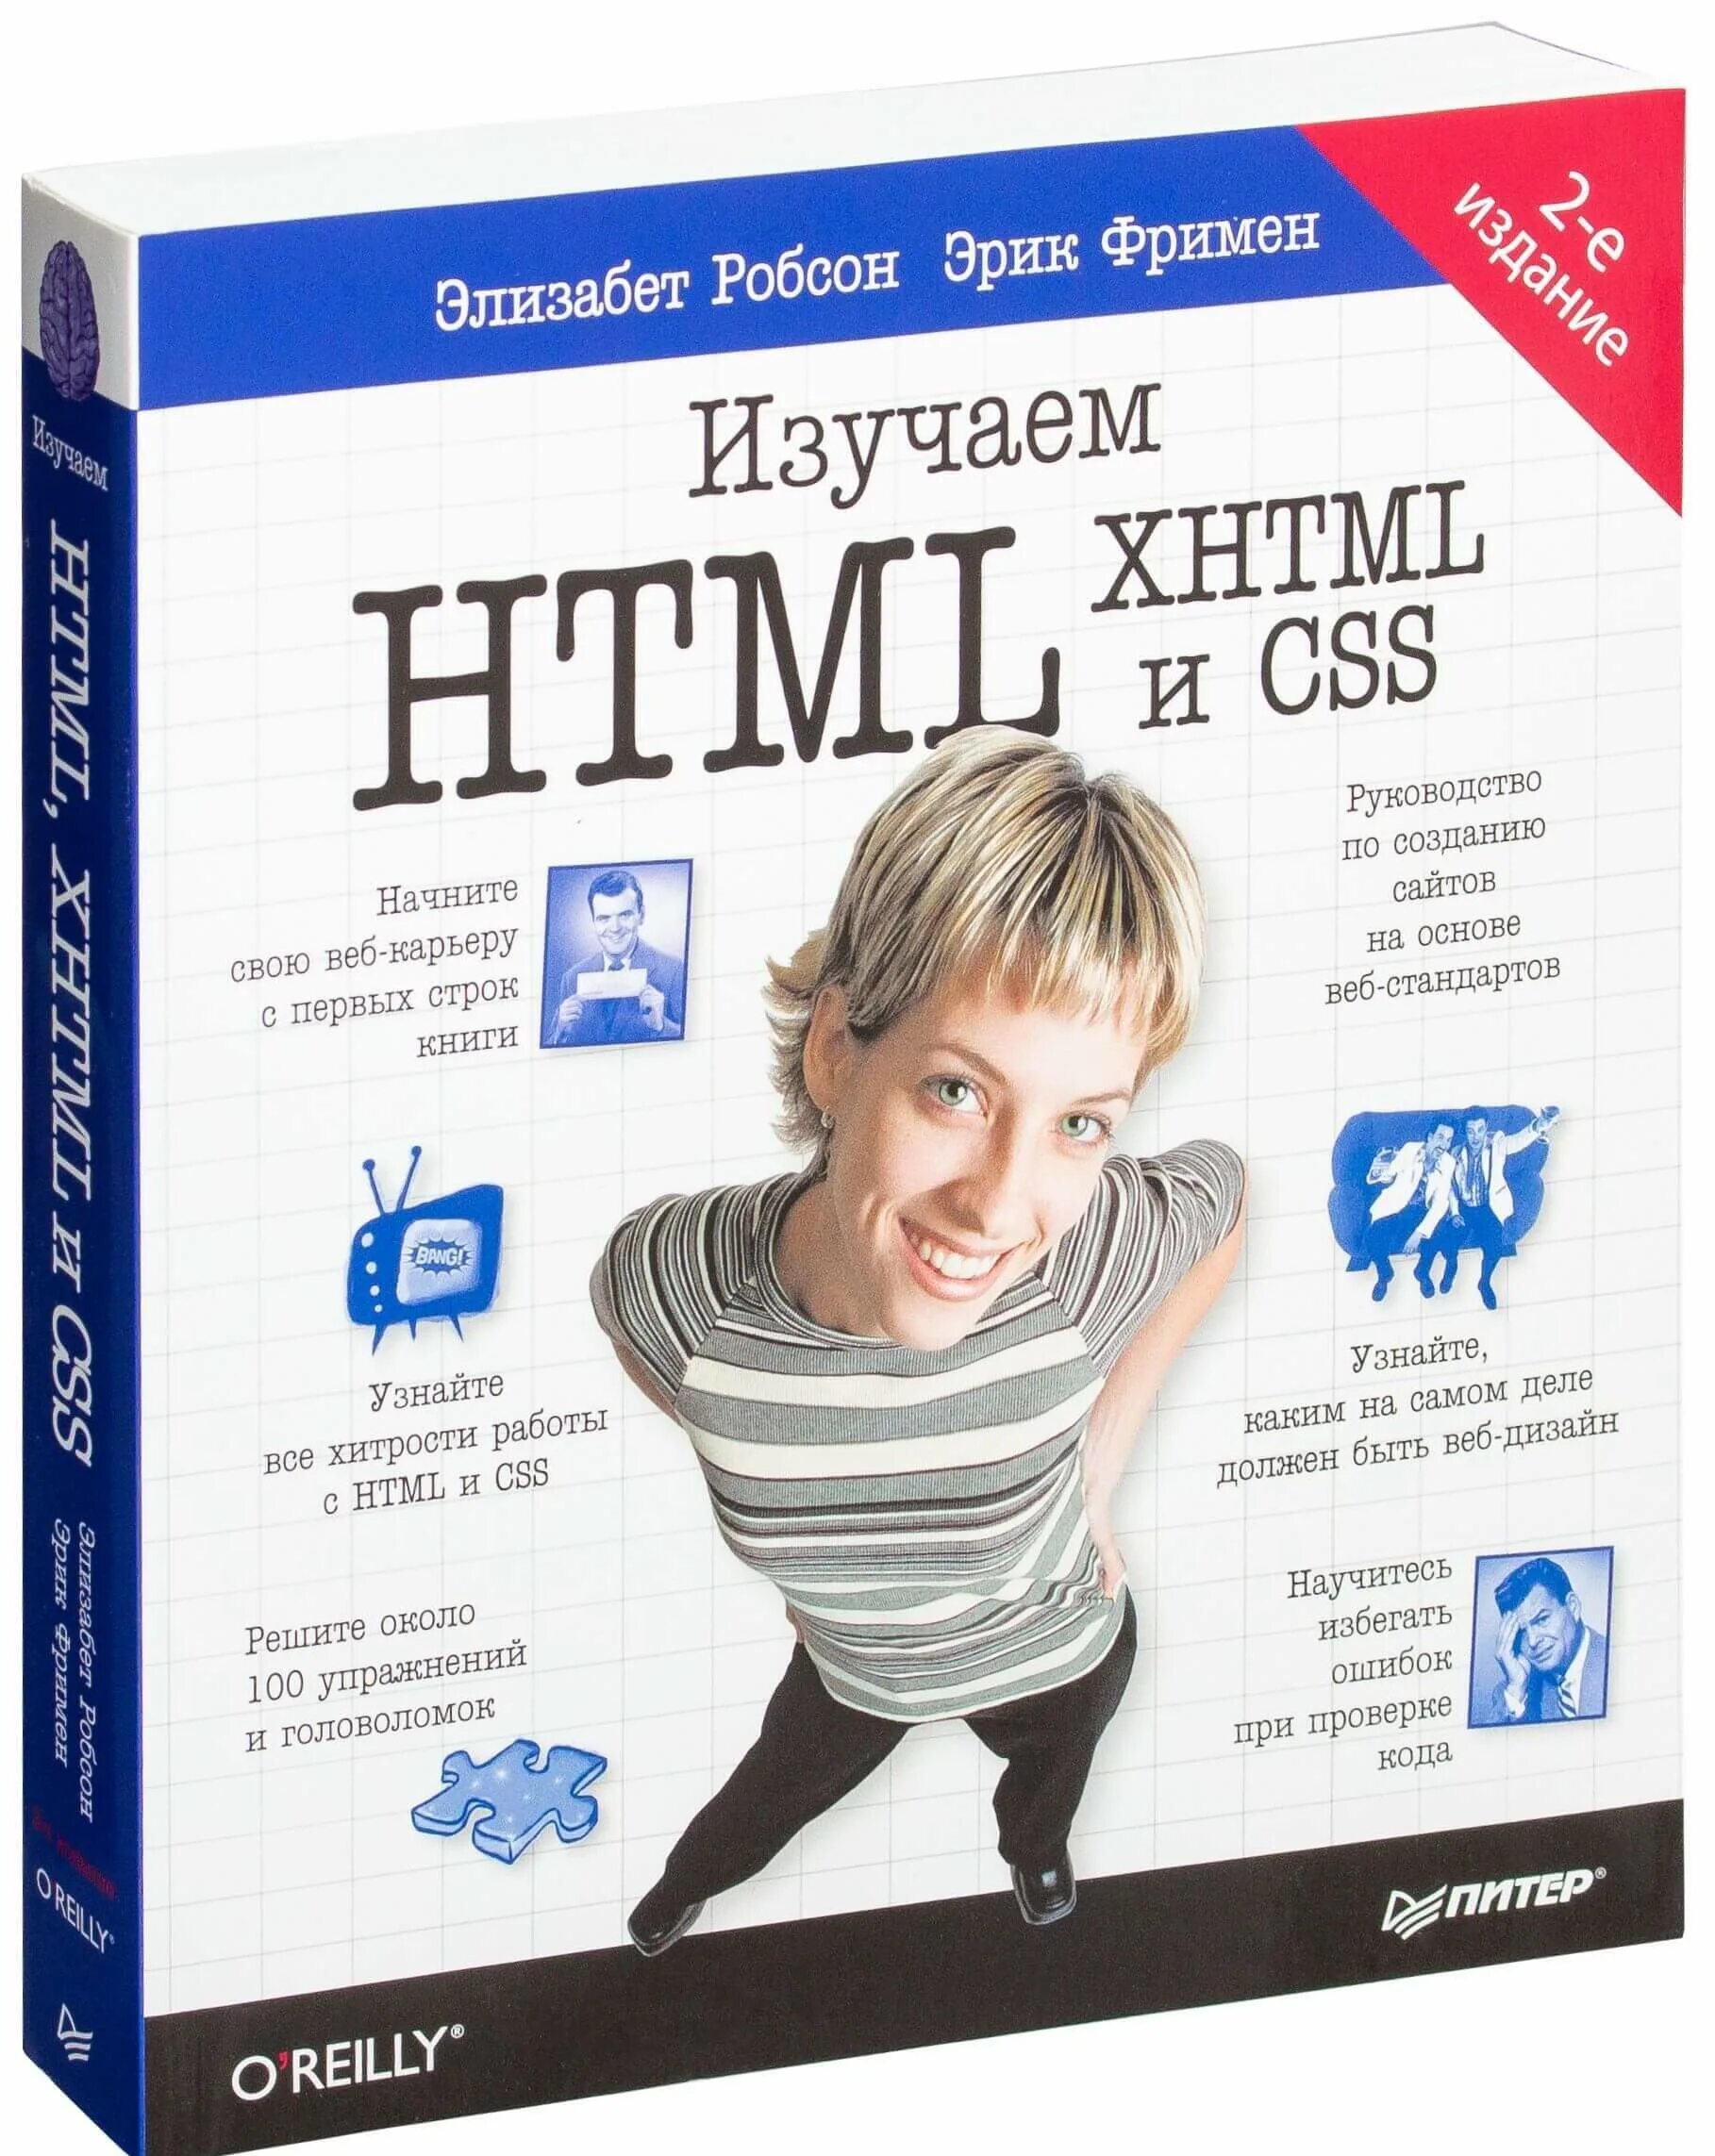 Ru library html. Робсон э., Фримен э. “изучаем html, XHTML И CSS”. Книги по html и CSS.